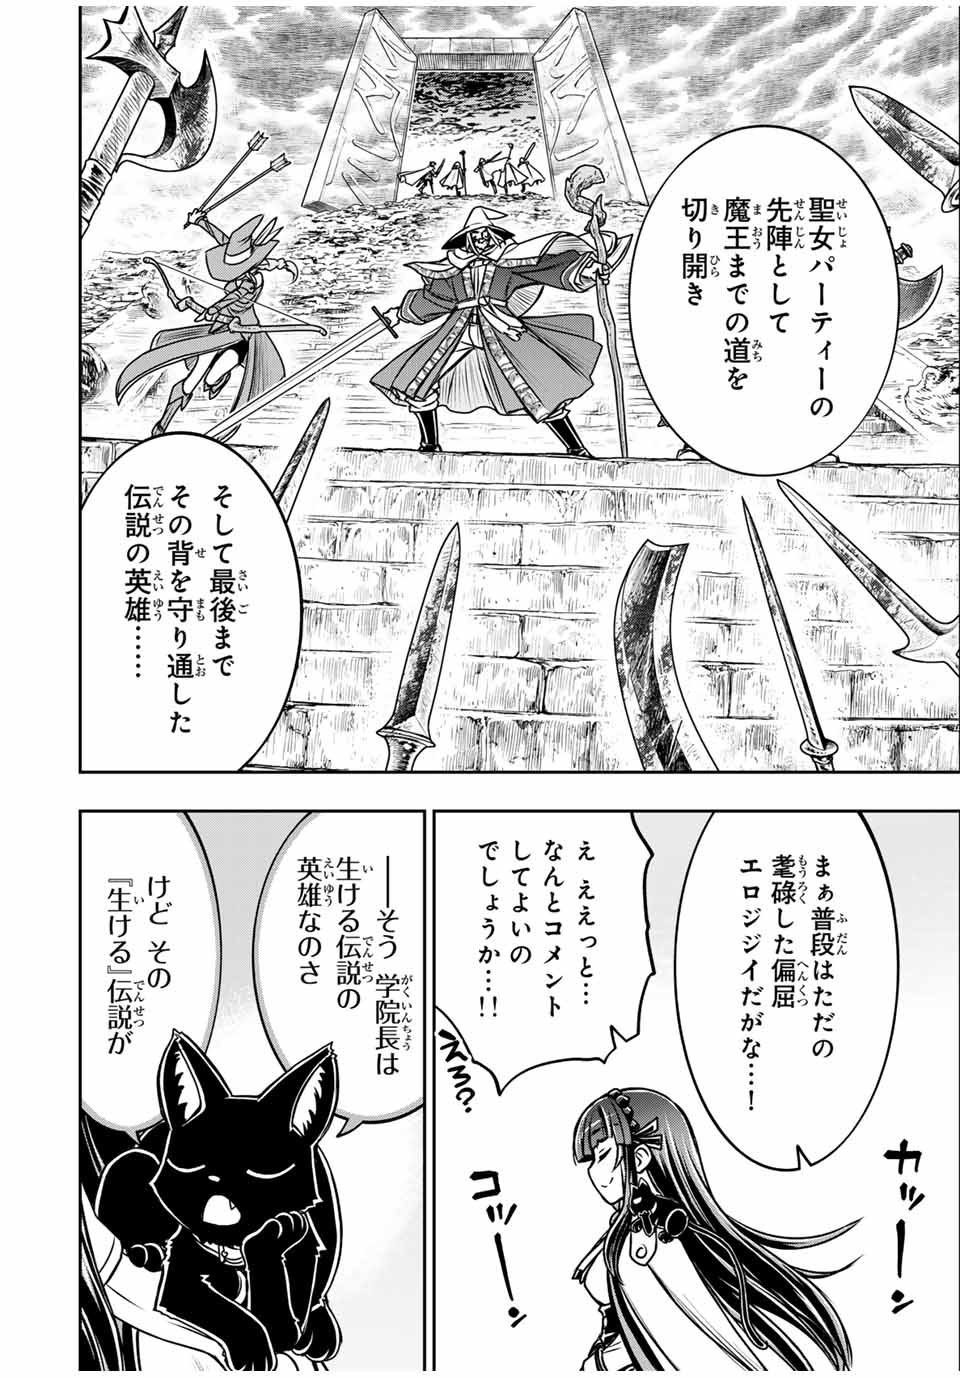 Nengan no Akuyaku Reijou (Last Boss) no Karada wo Teniiretazo!  - Chapter 25 - Page 2